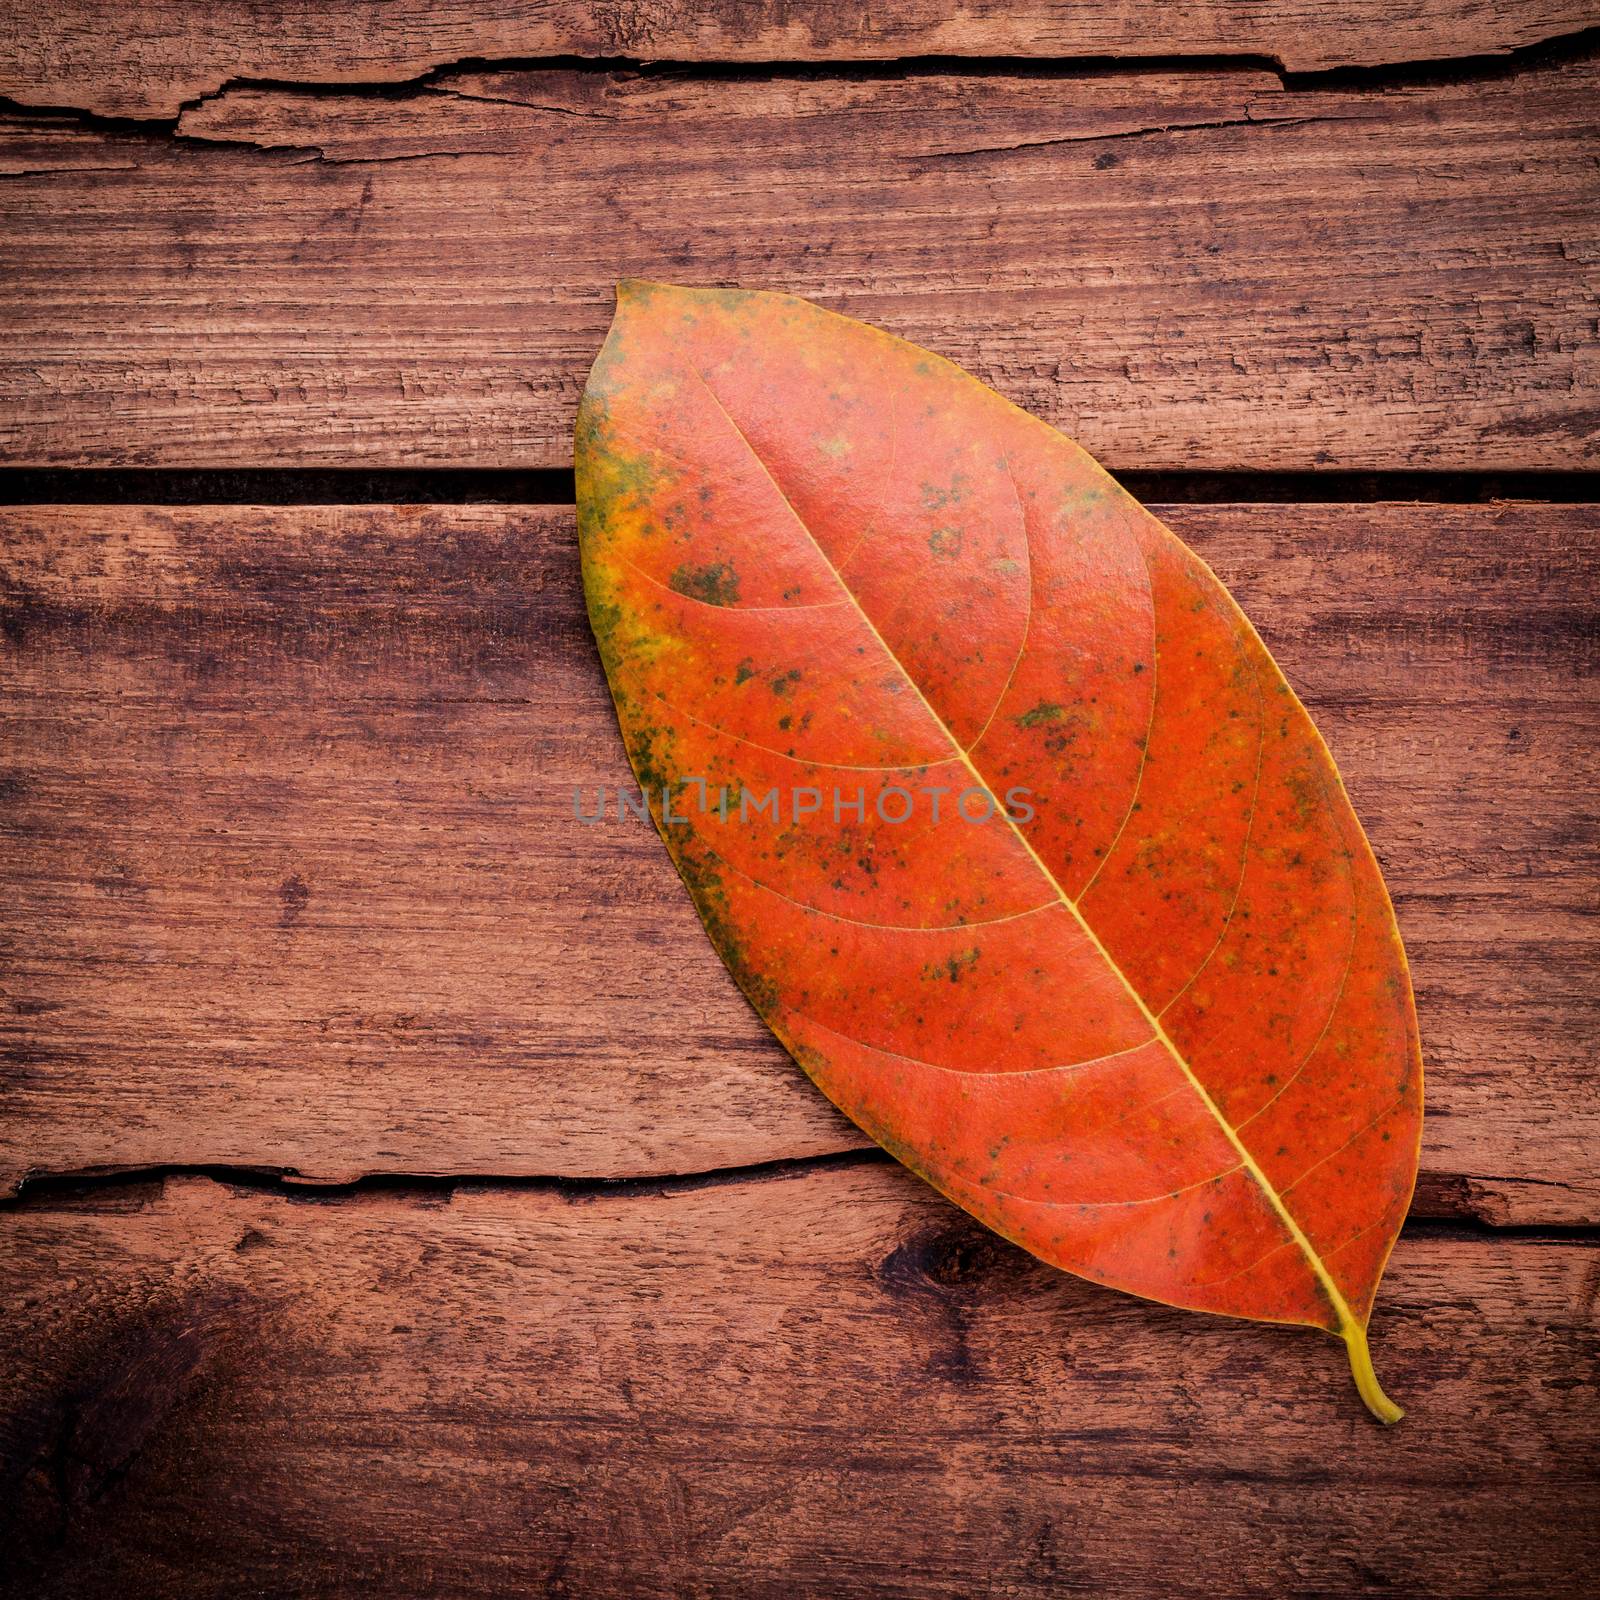 Autumn season and peaceful concepts. Orange leaves falling on ru by kerdkanno